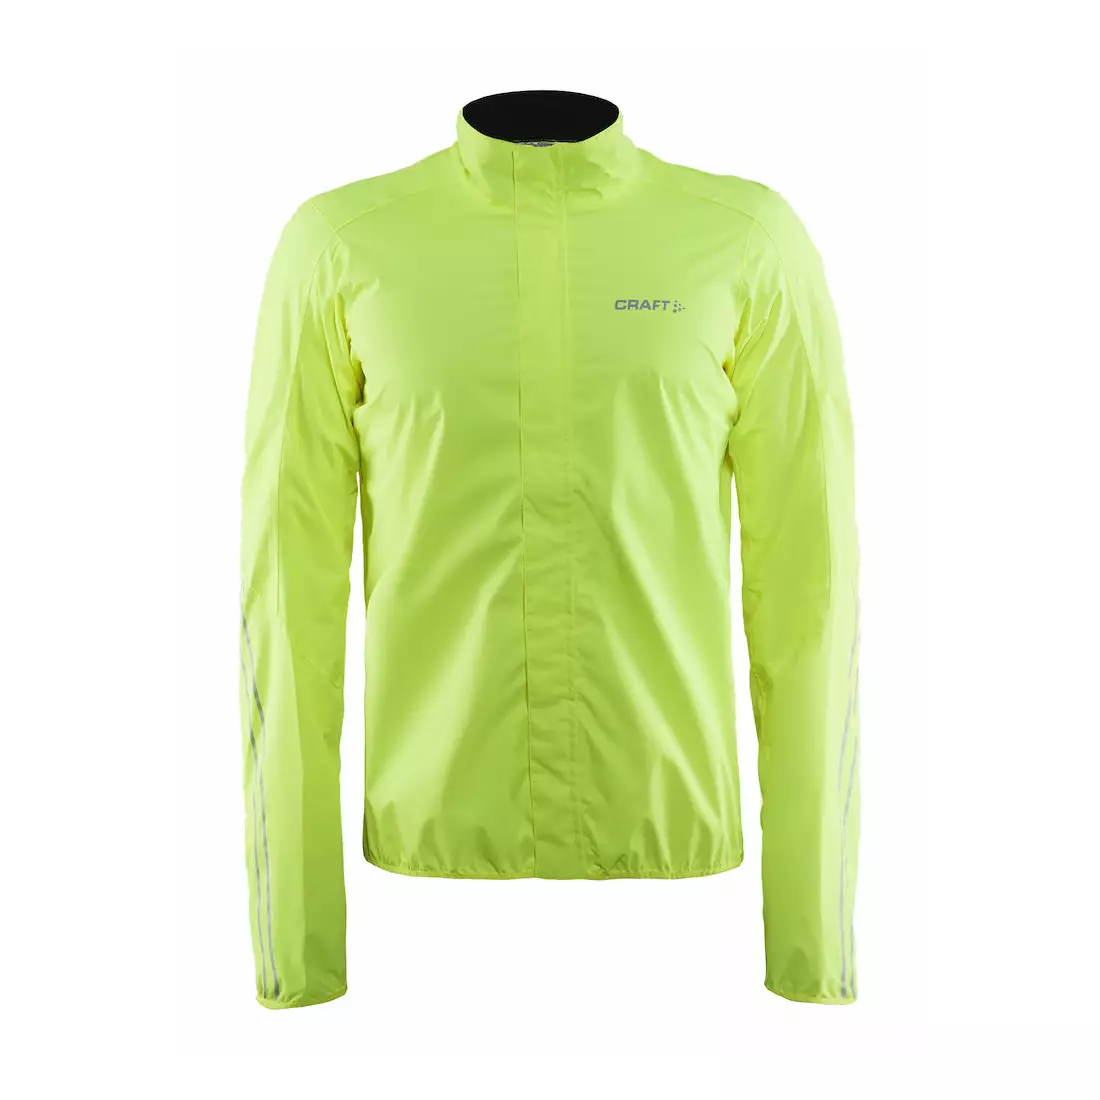 CRAFT VELO men's lightweight rainproof cycling jacket 1904440-1851